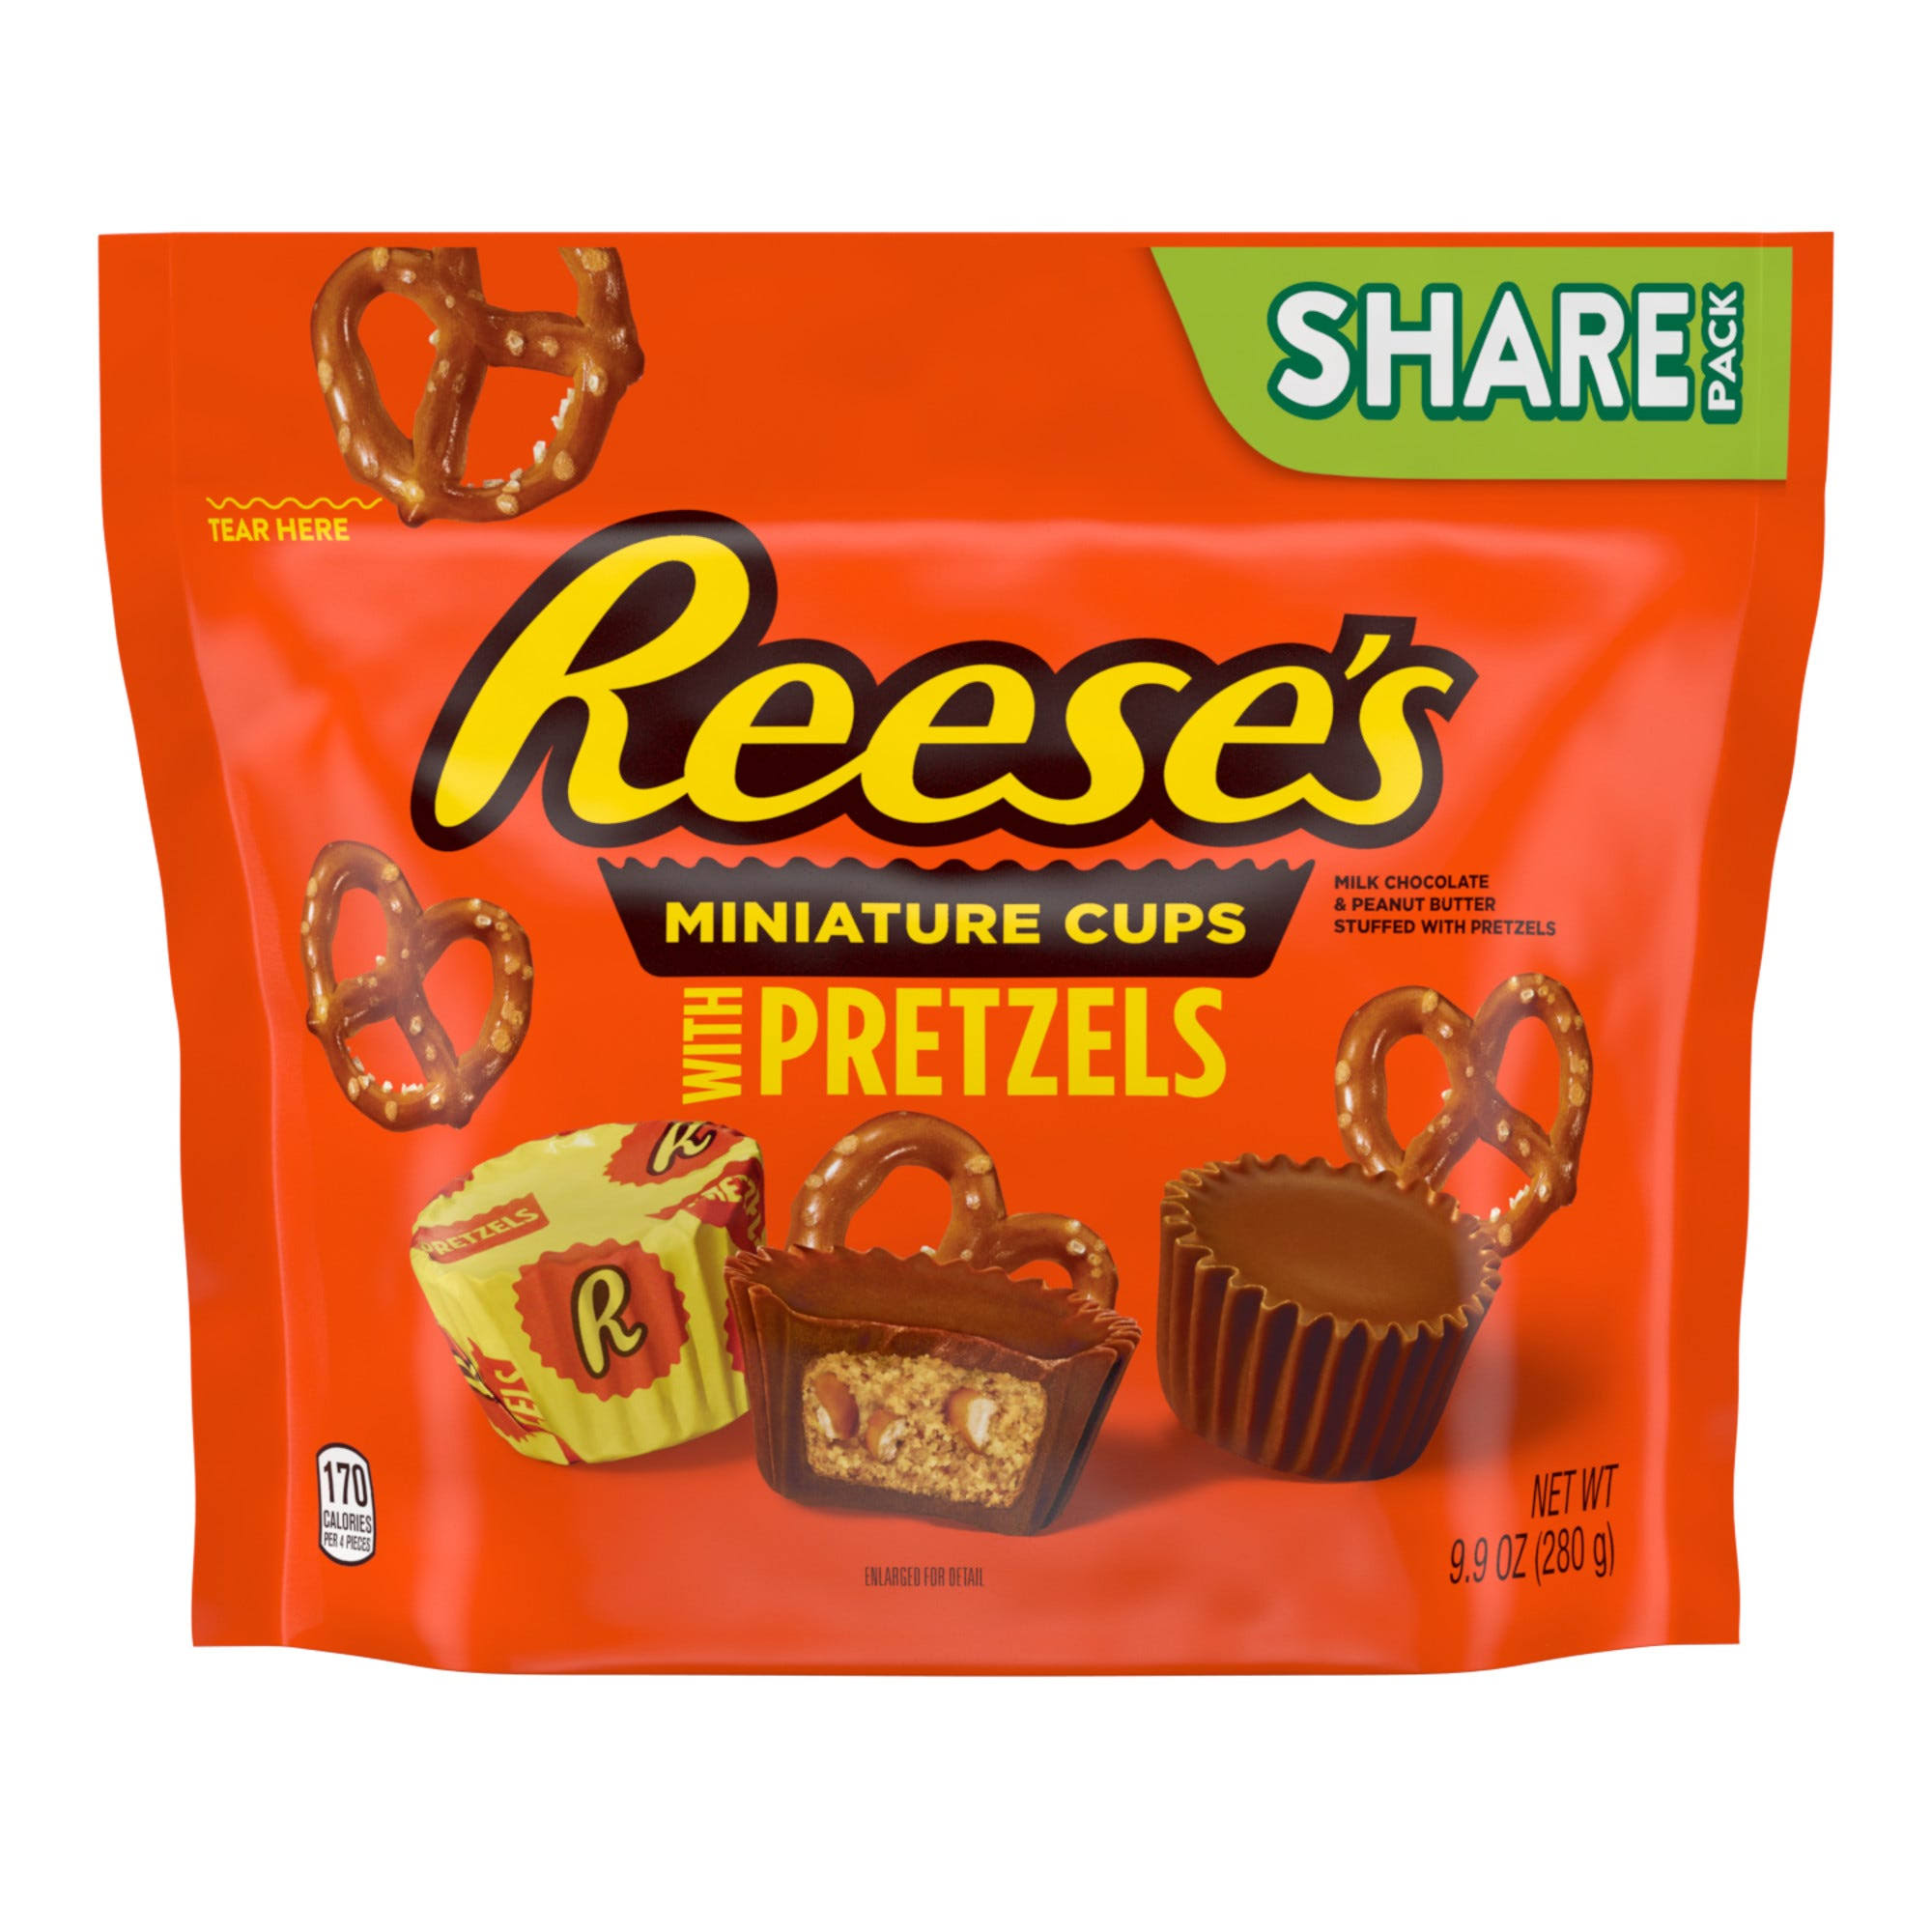 Reese's Pretzels Miniature Cups, Share Pack - 9.9 oz